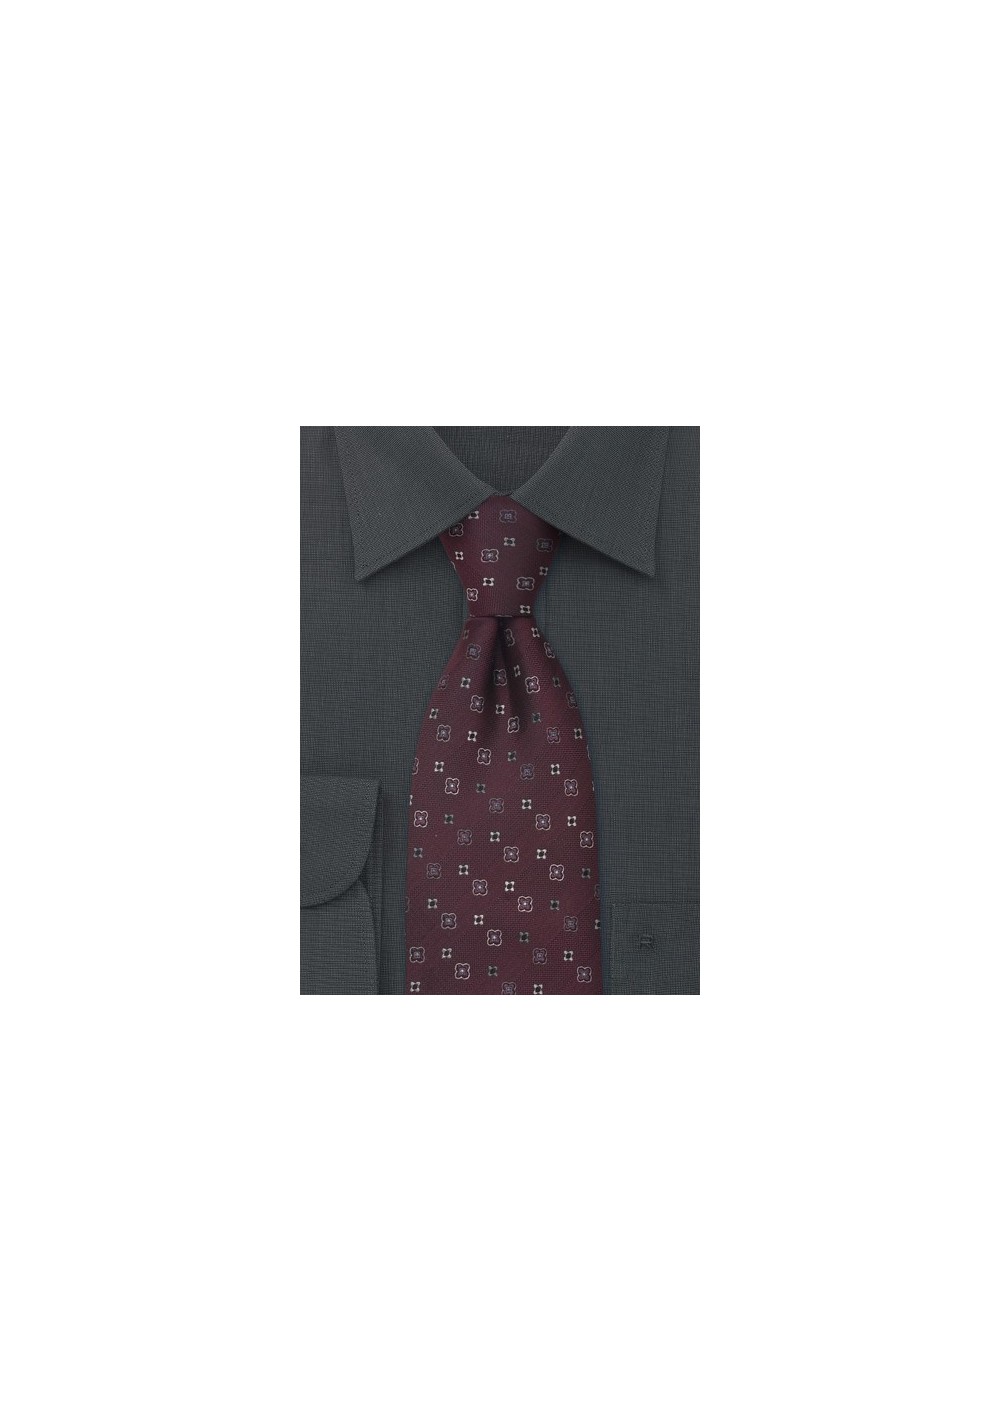 Extra Long Ties -  Burgundy red silk tie by Chevalier